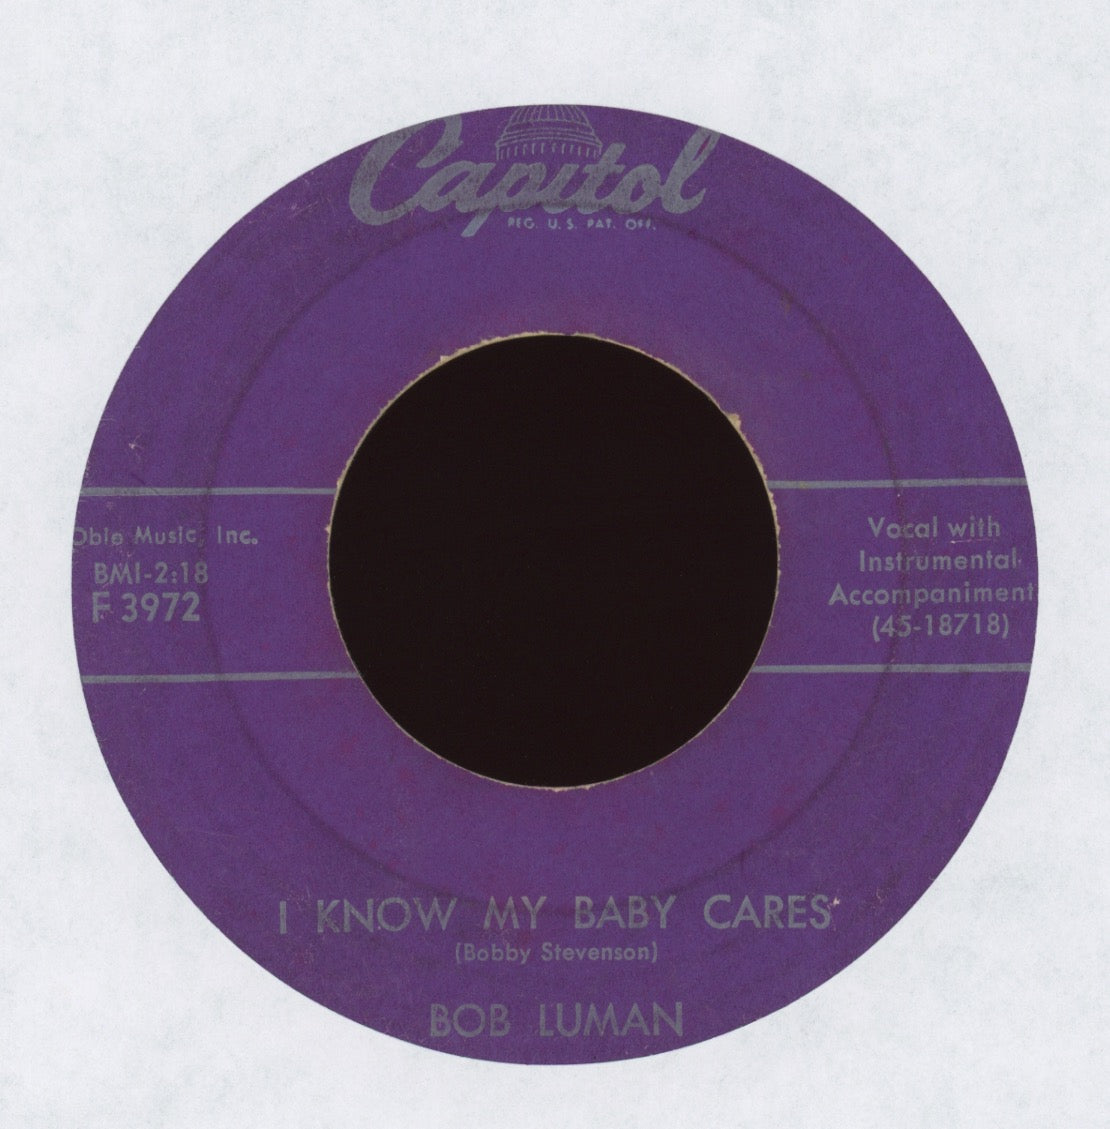 Bob Luman - I Know My Baby Cares on Capitol